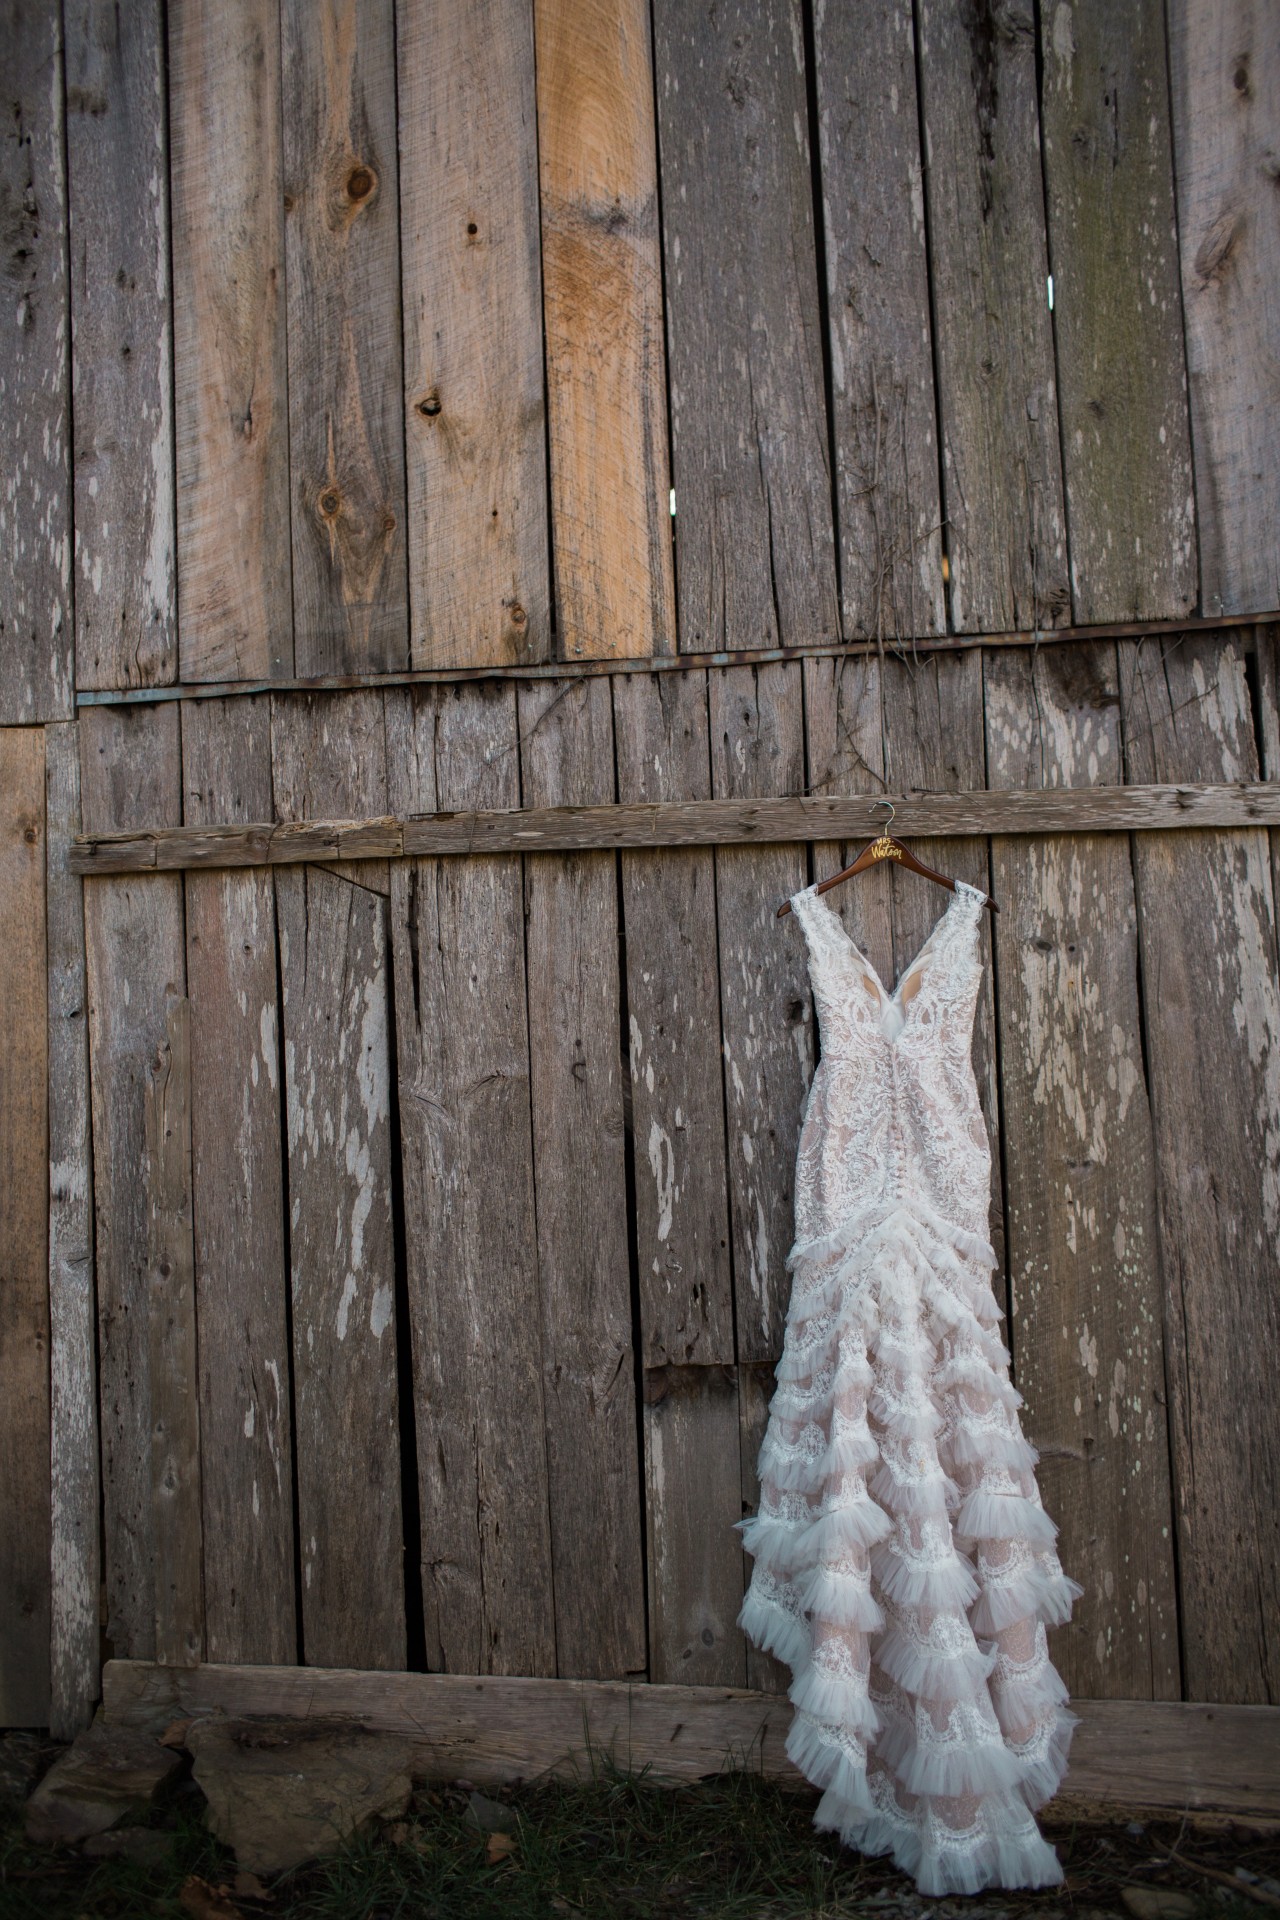 Dress hanging at vintage barn